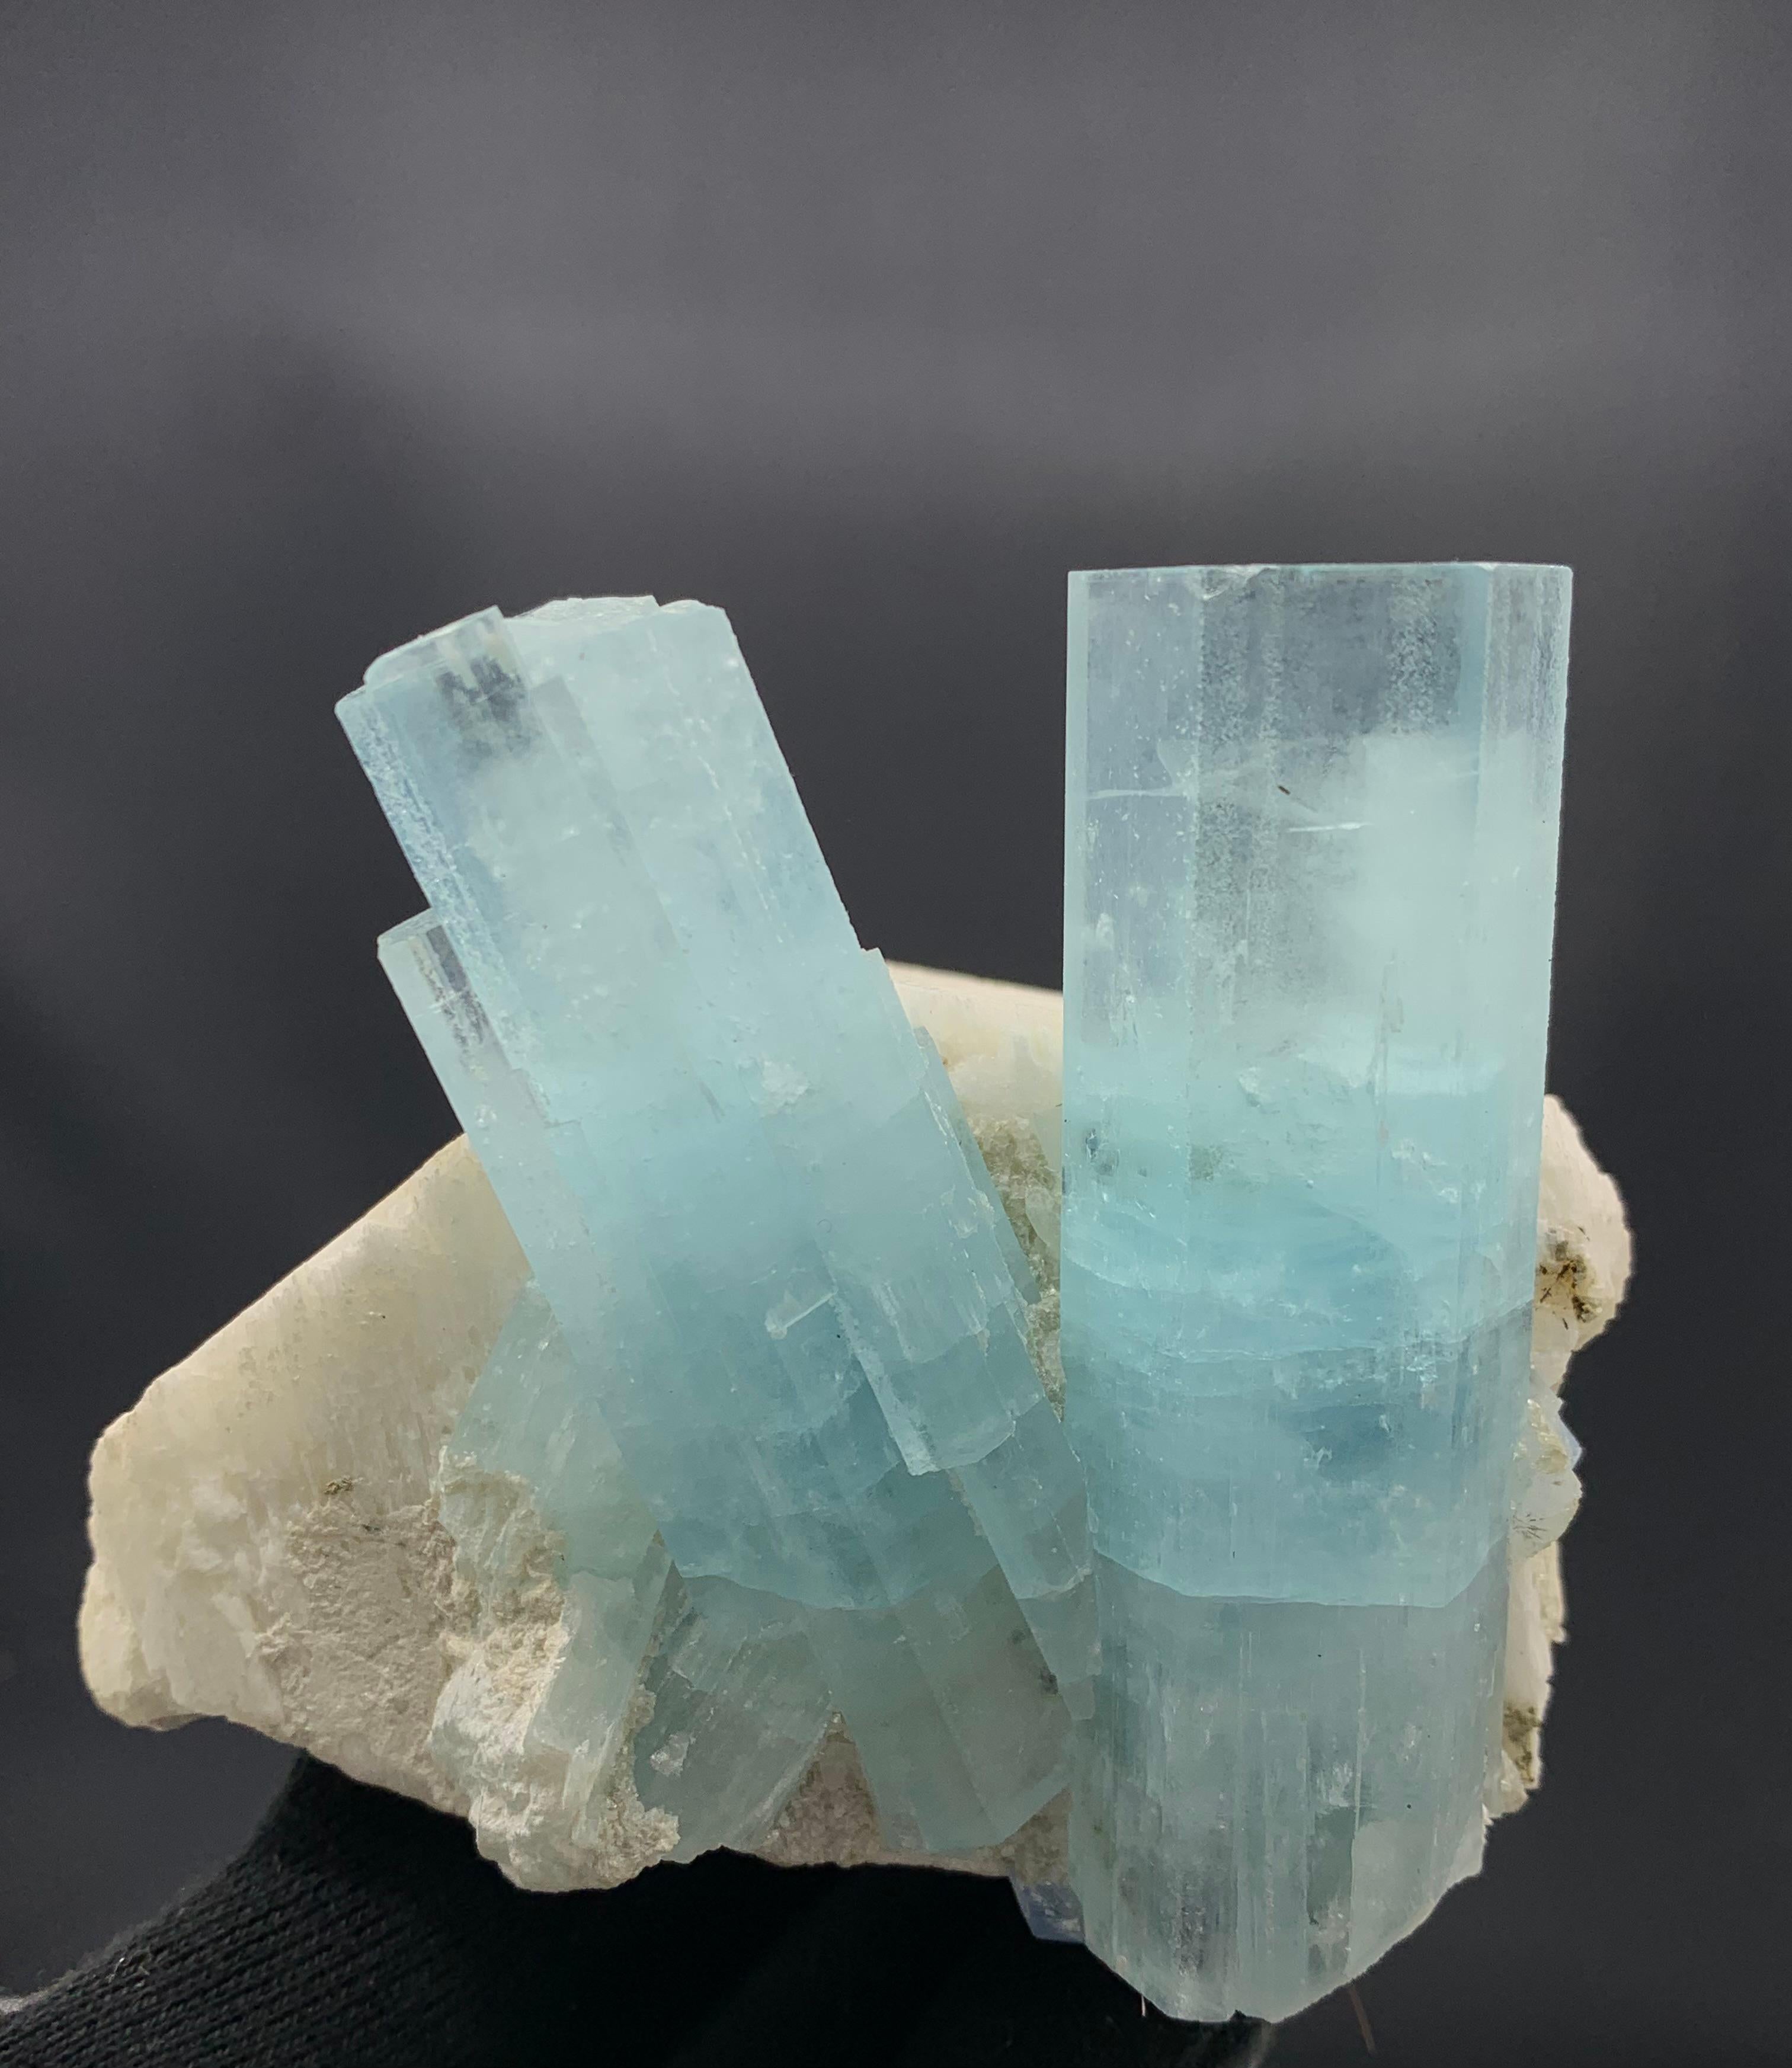 681.51 Gram Pretty Dual Aquamarine Crystal Attached With Feldspar From Pakistan 

Weight: 681.51 Gram
Dimension: 8.1 x 8.7 x 7.2 Cm
Origin: Shigar Valley, Skardu District, Gilgit Baltistan Province, Pakistan

Aquamarine is a pale-blue to light-green